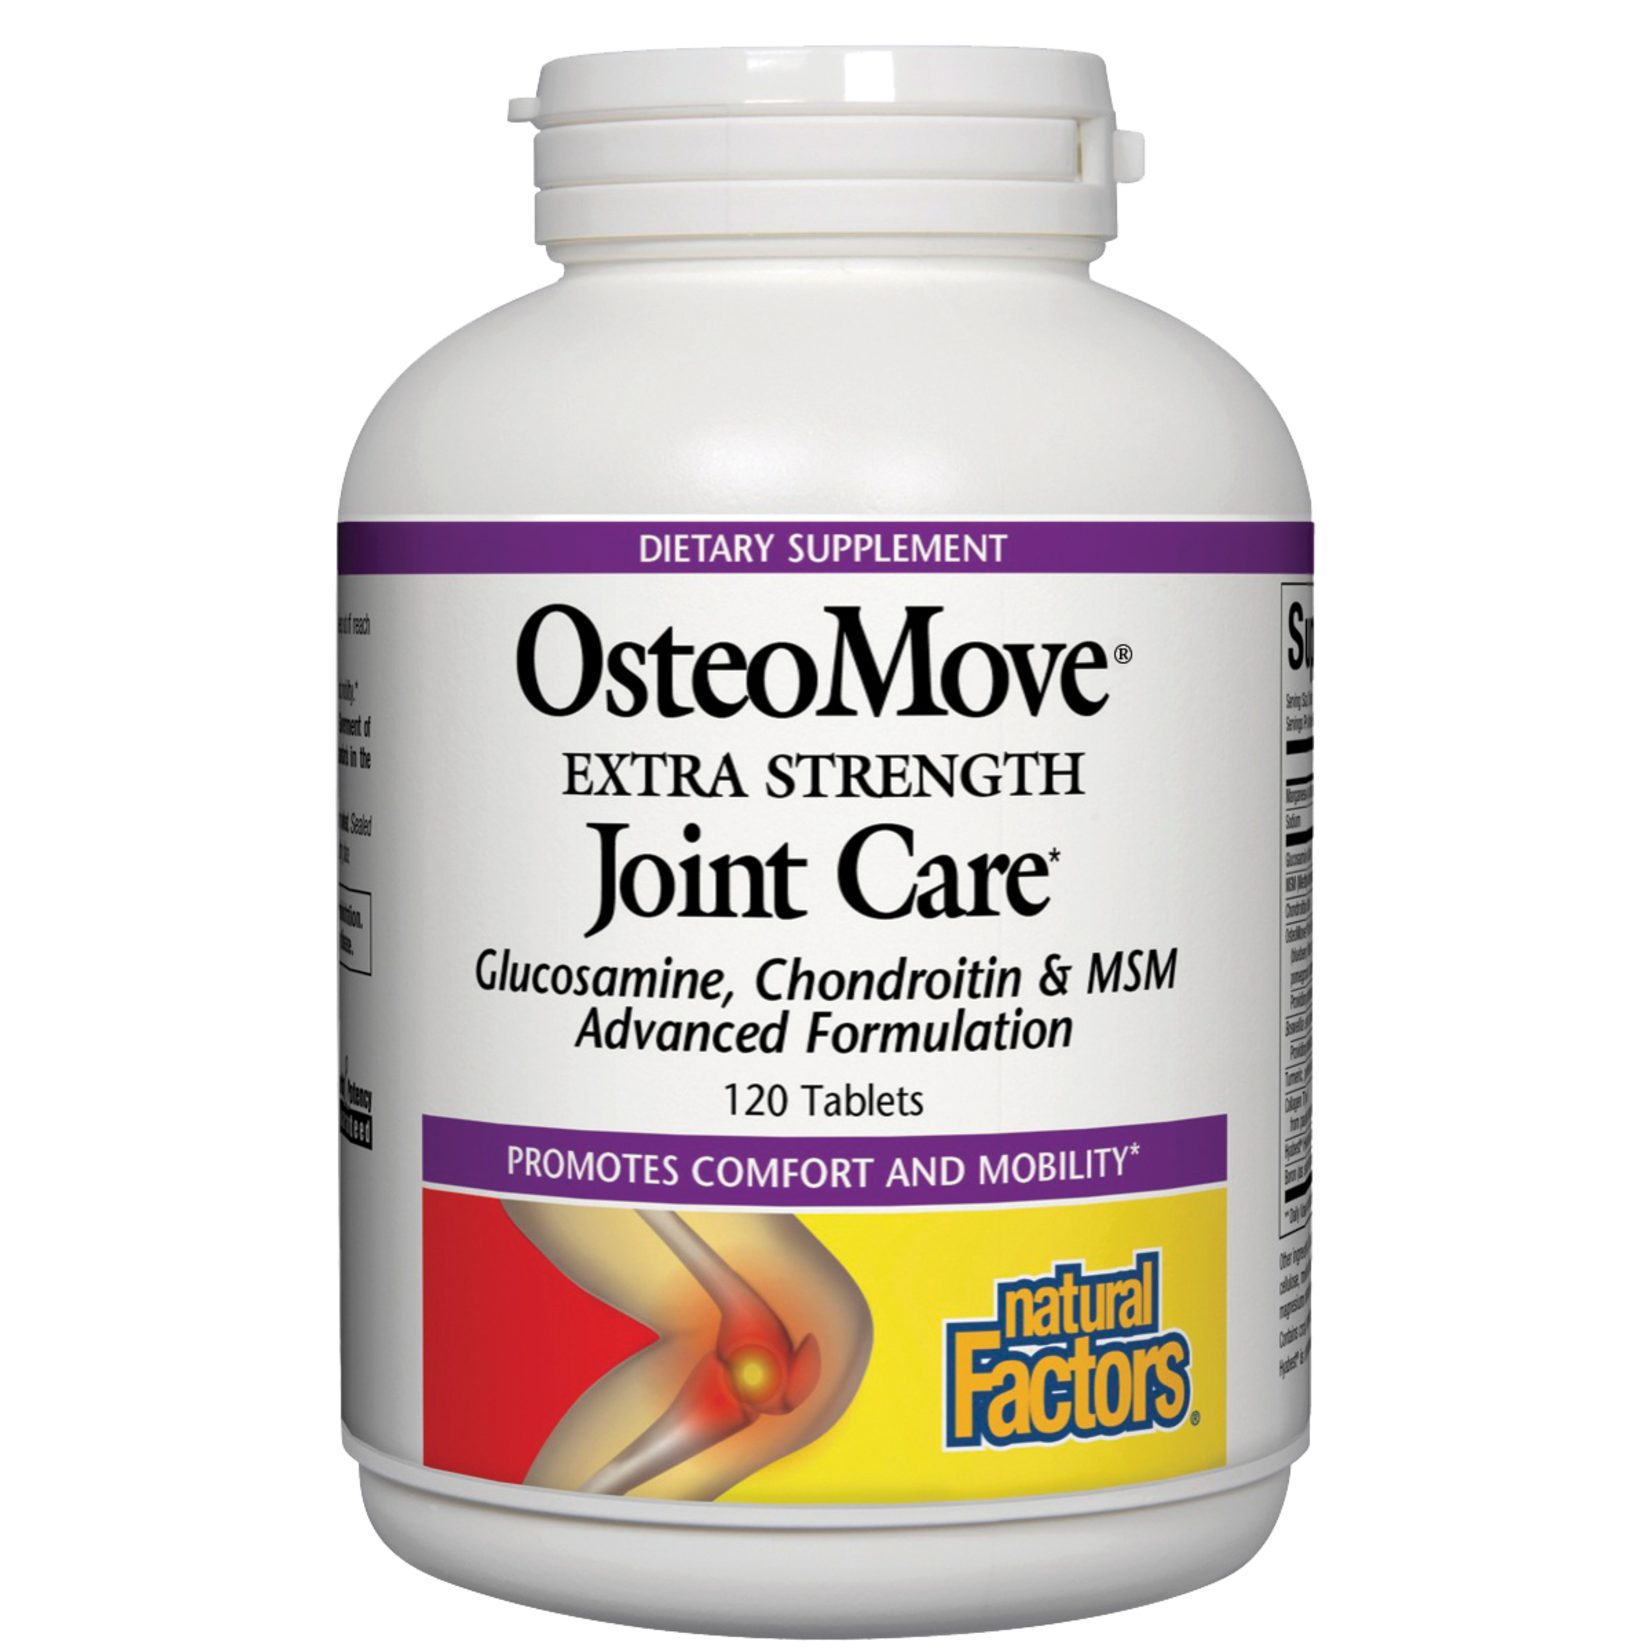 Natural Factors Natural Factors - Osteomove Joint Care - 120 Tablets